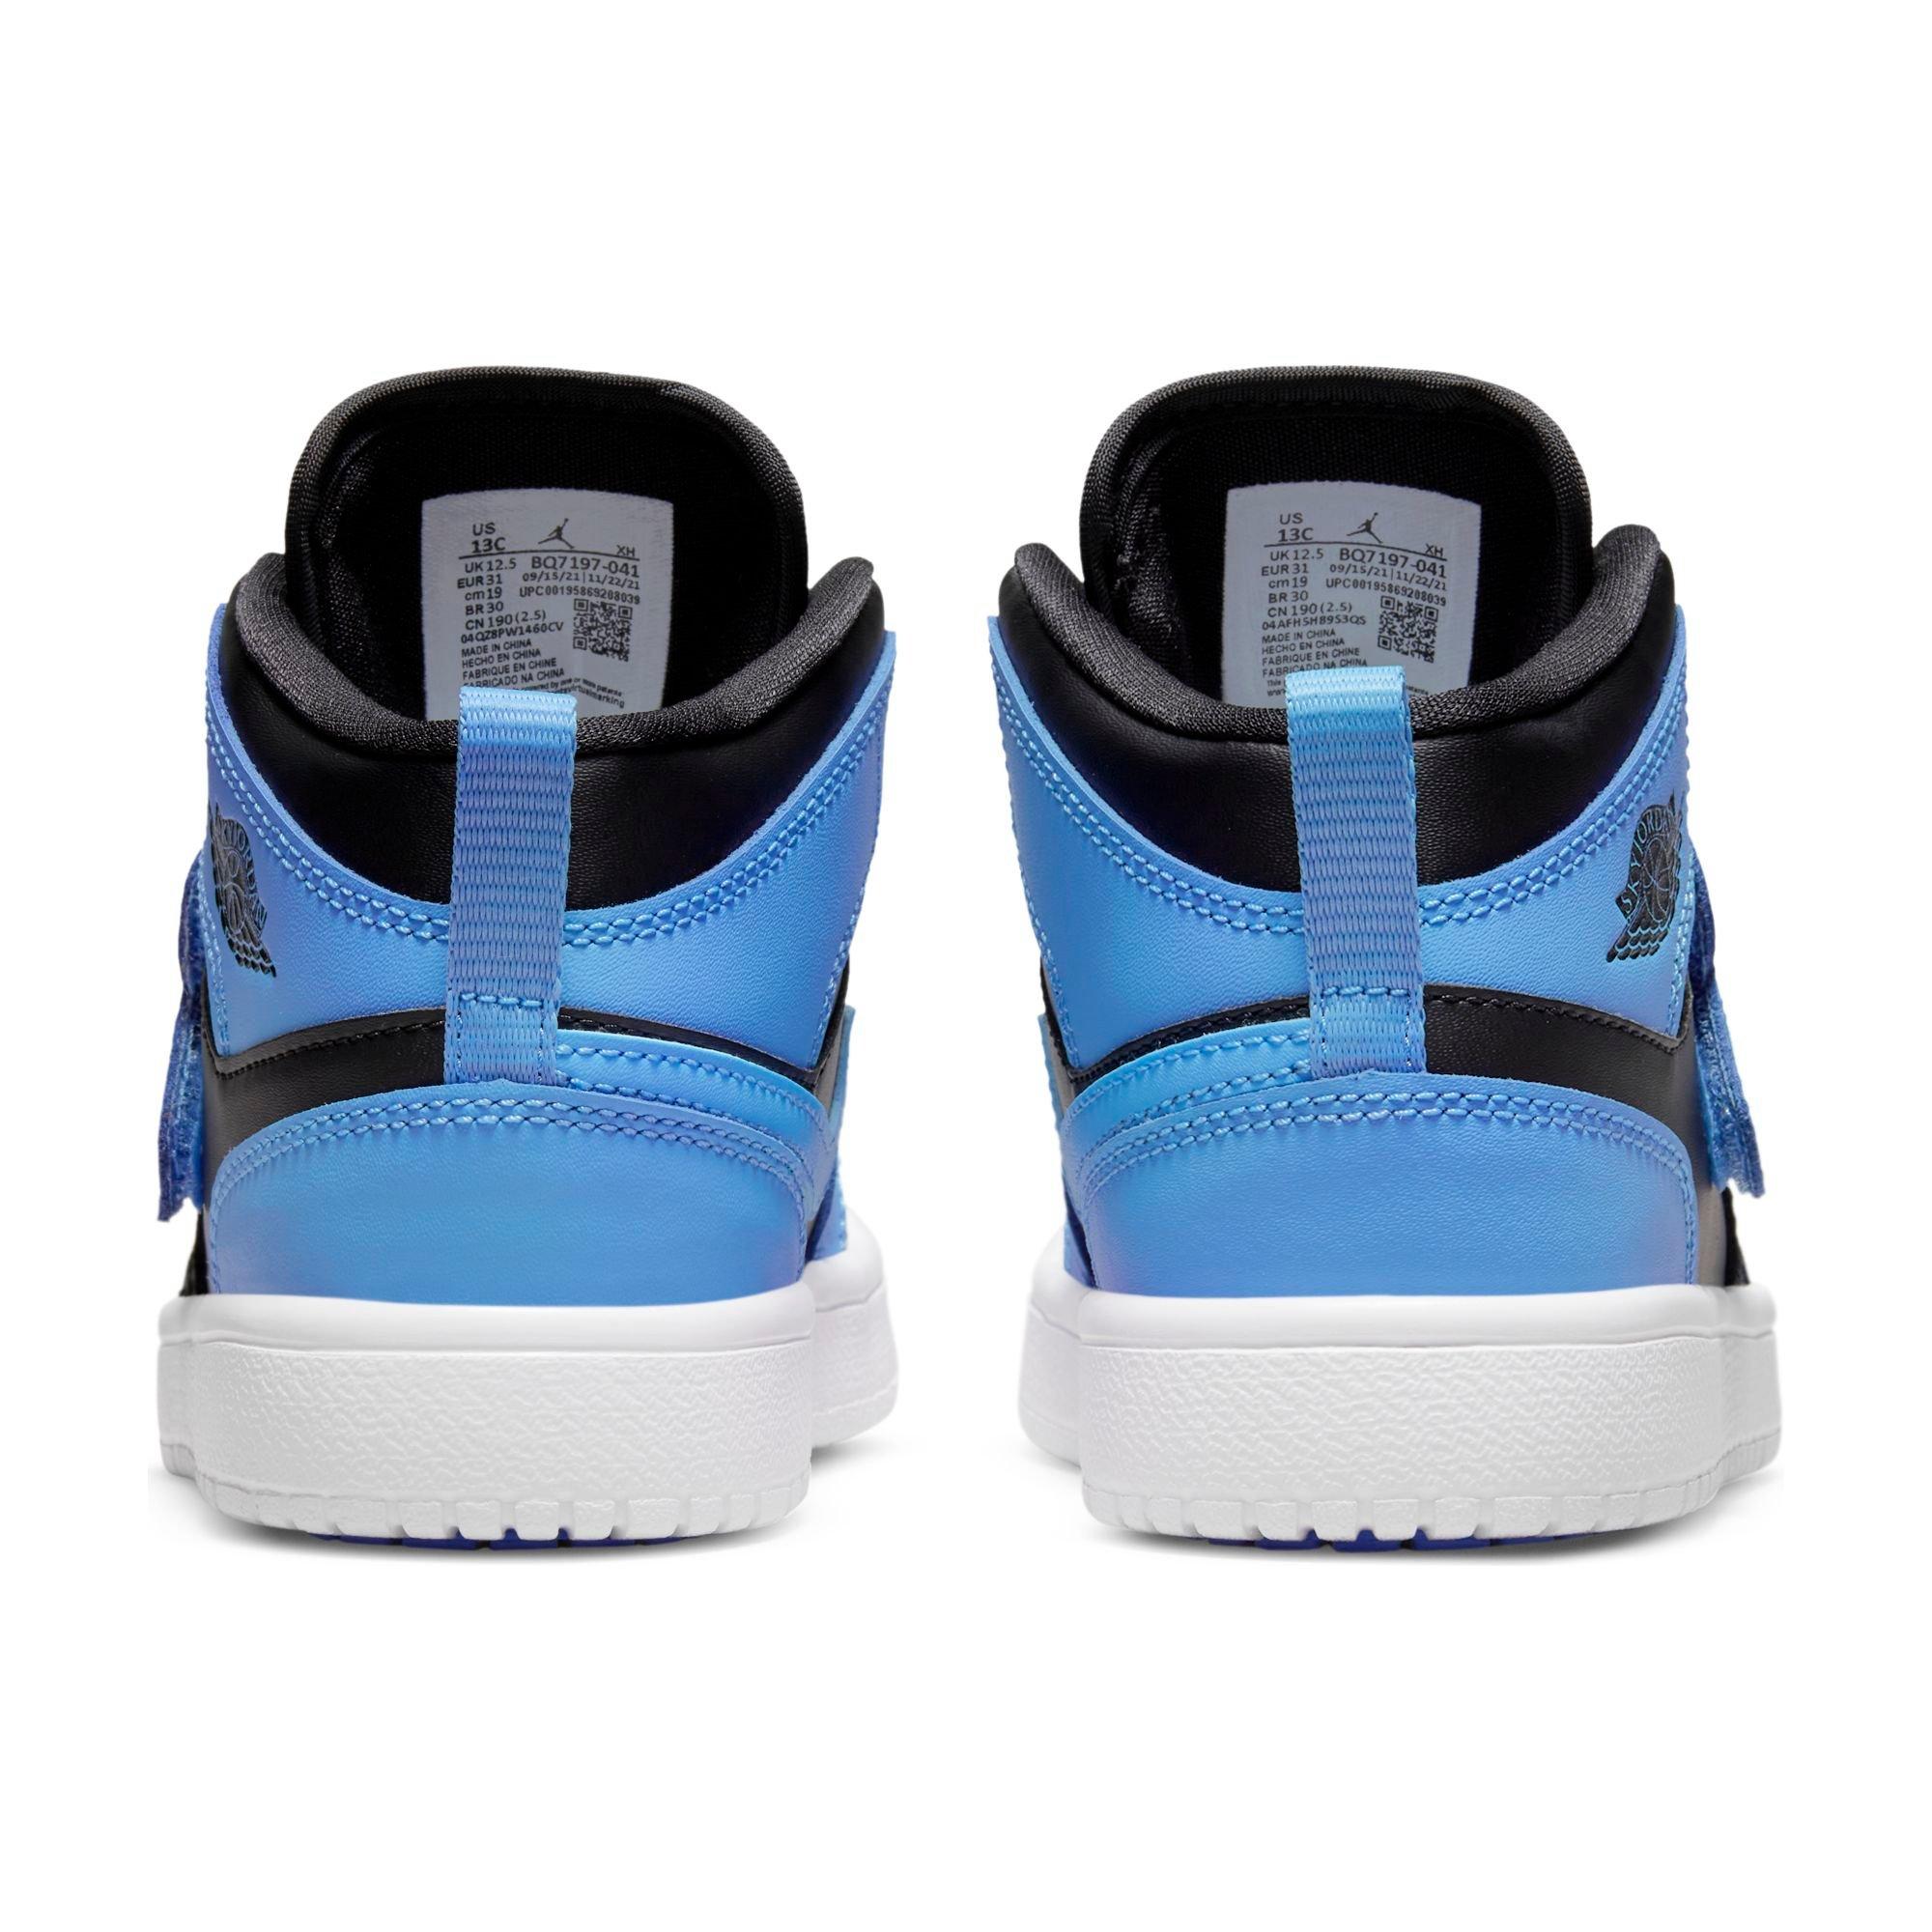 Air Jordan 1 Retro High University Blue Nike Shoes - China Casual